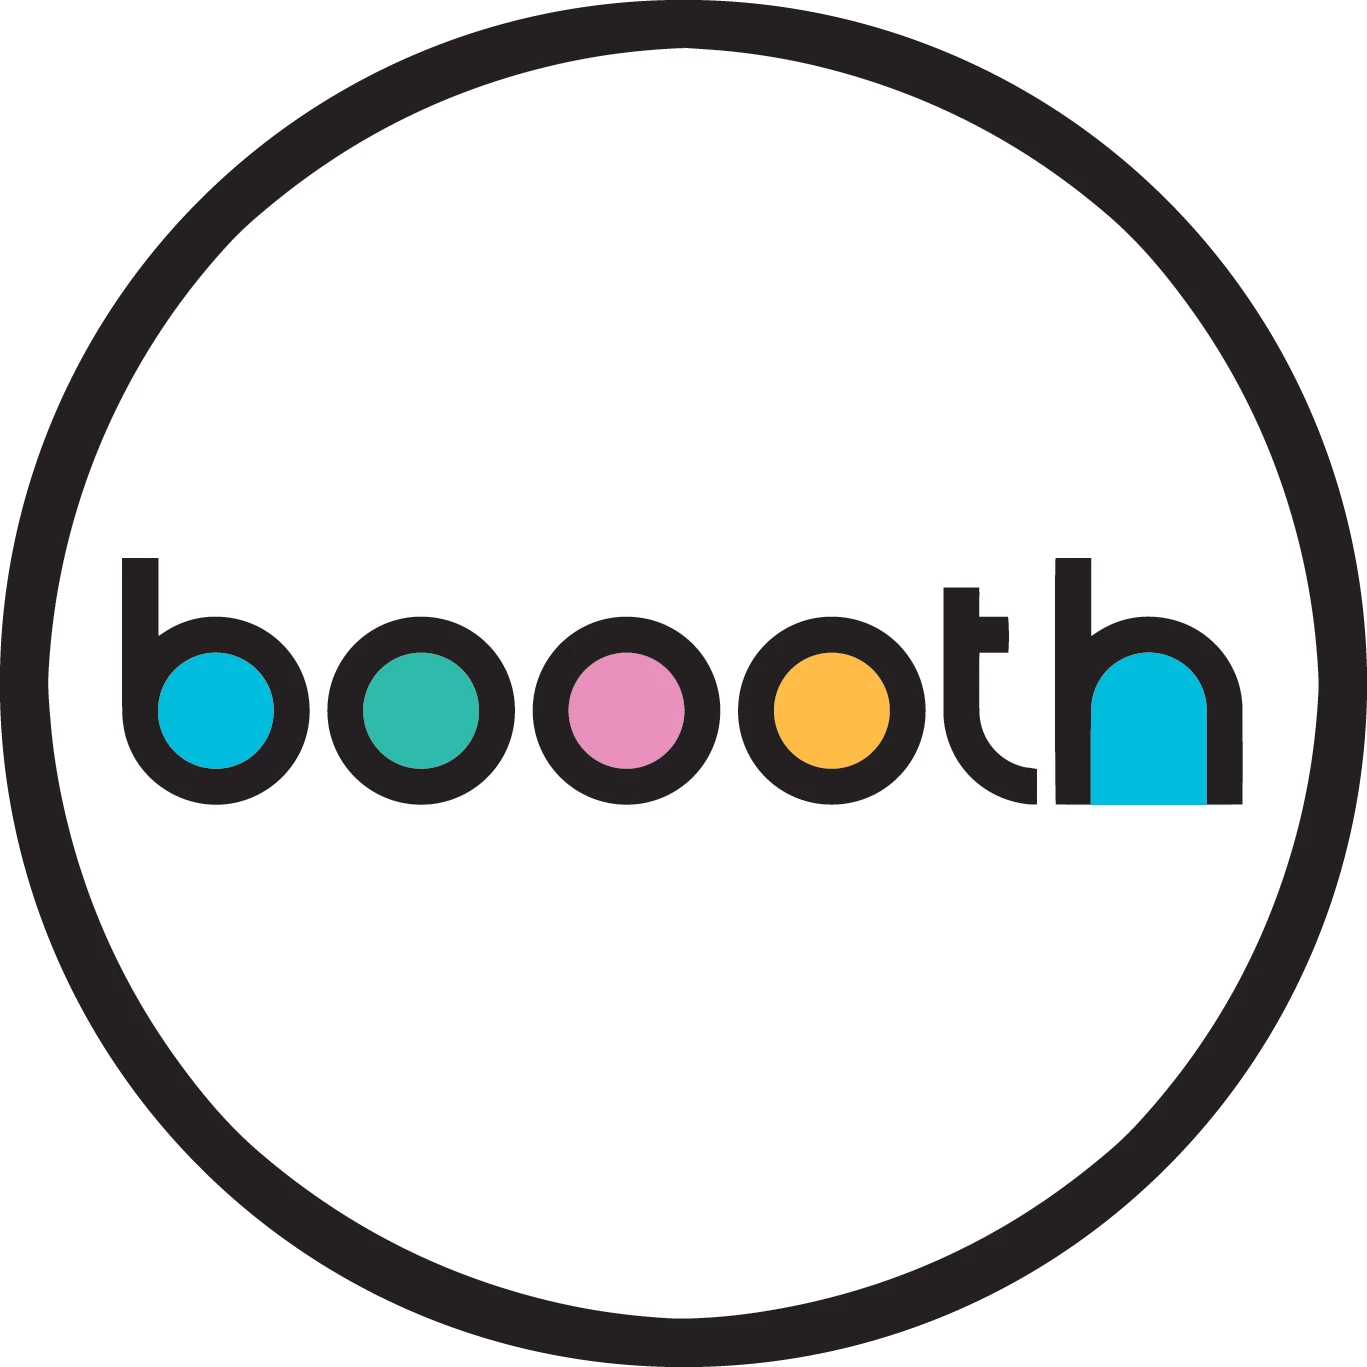 _Boooth logo_Round